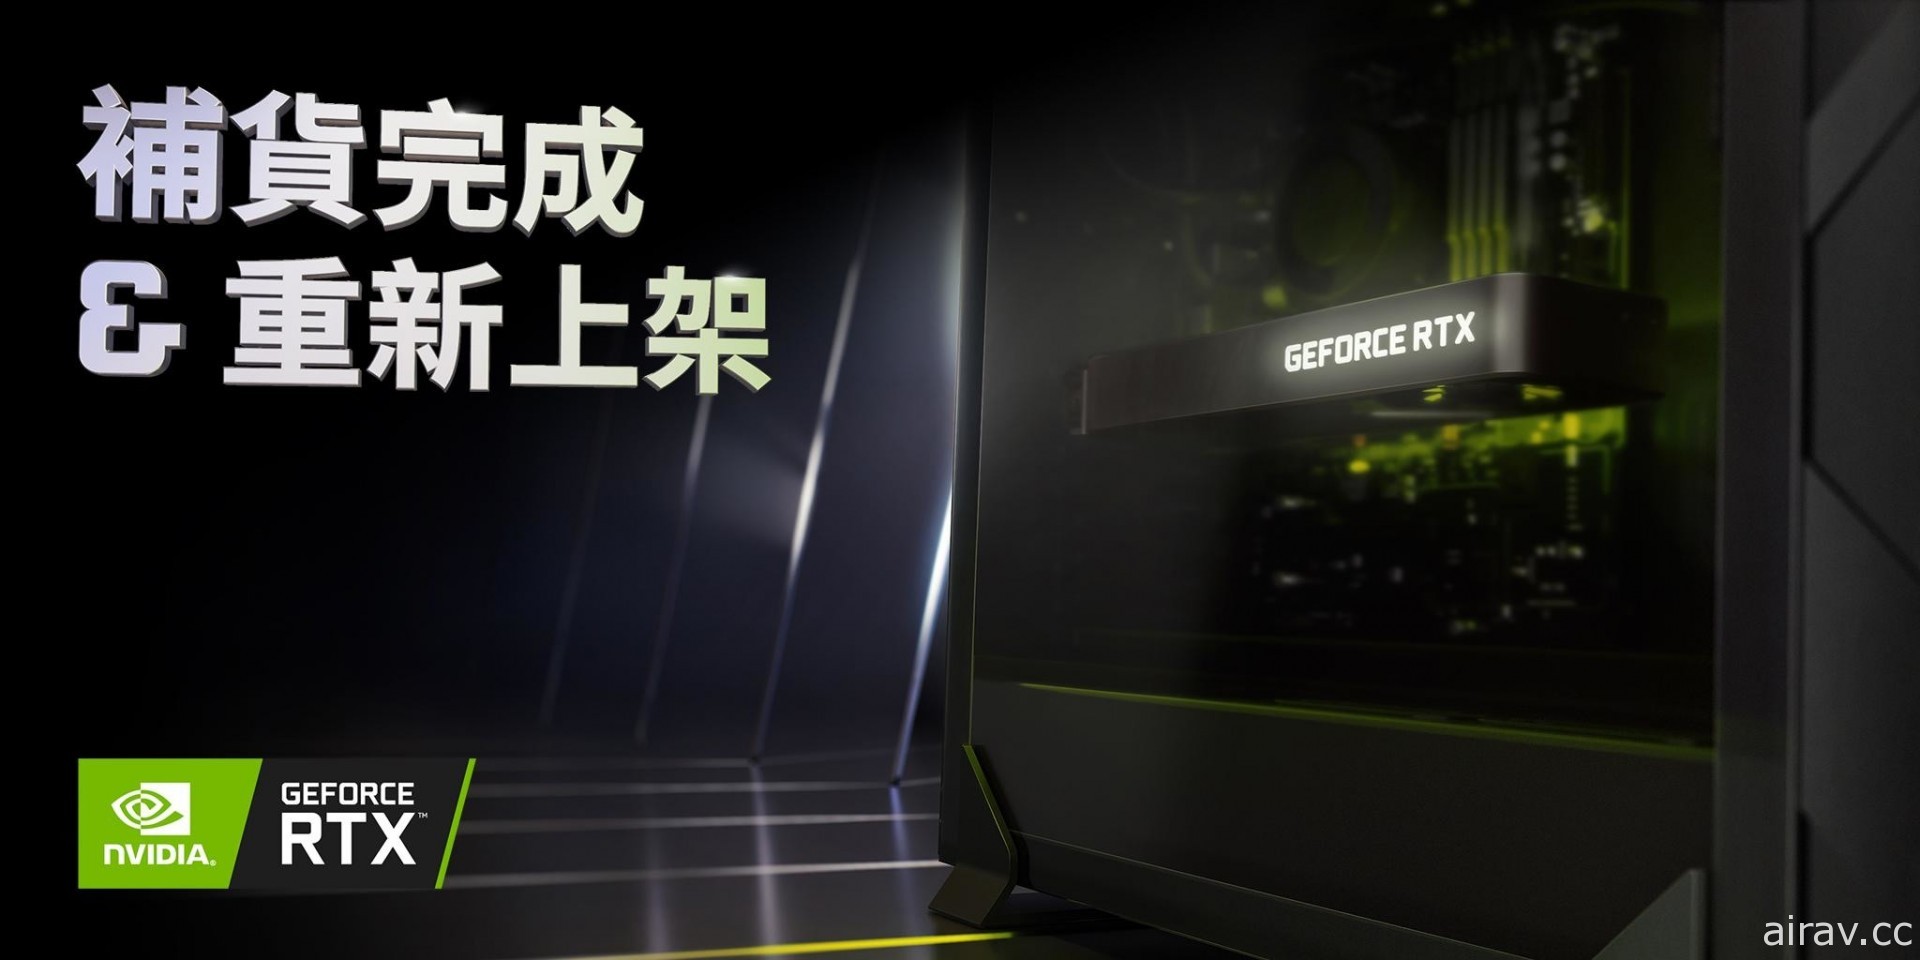 NVIDIA 宣布 GeForce RTX 30 系列顯示卡現已「補貨完成，重新上架」全面販售中